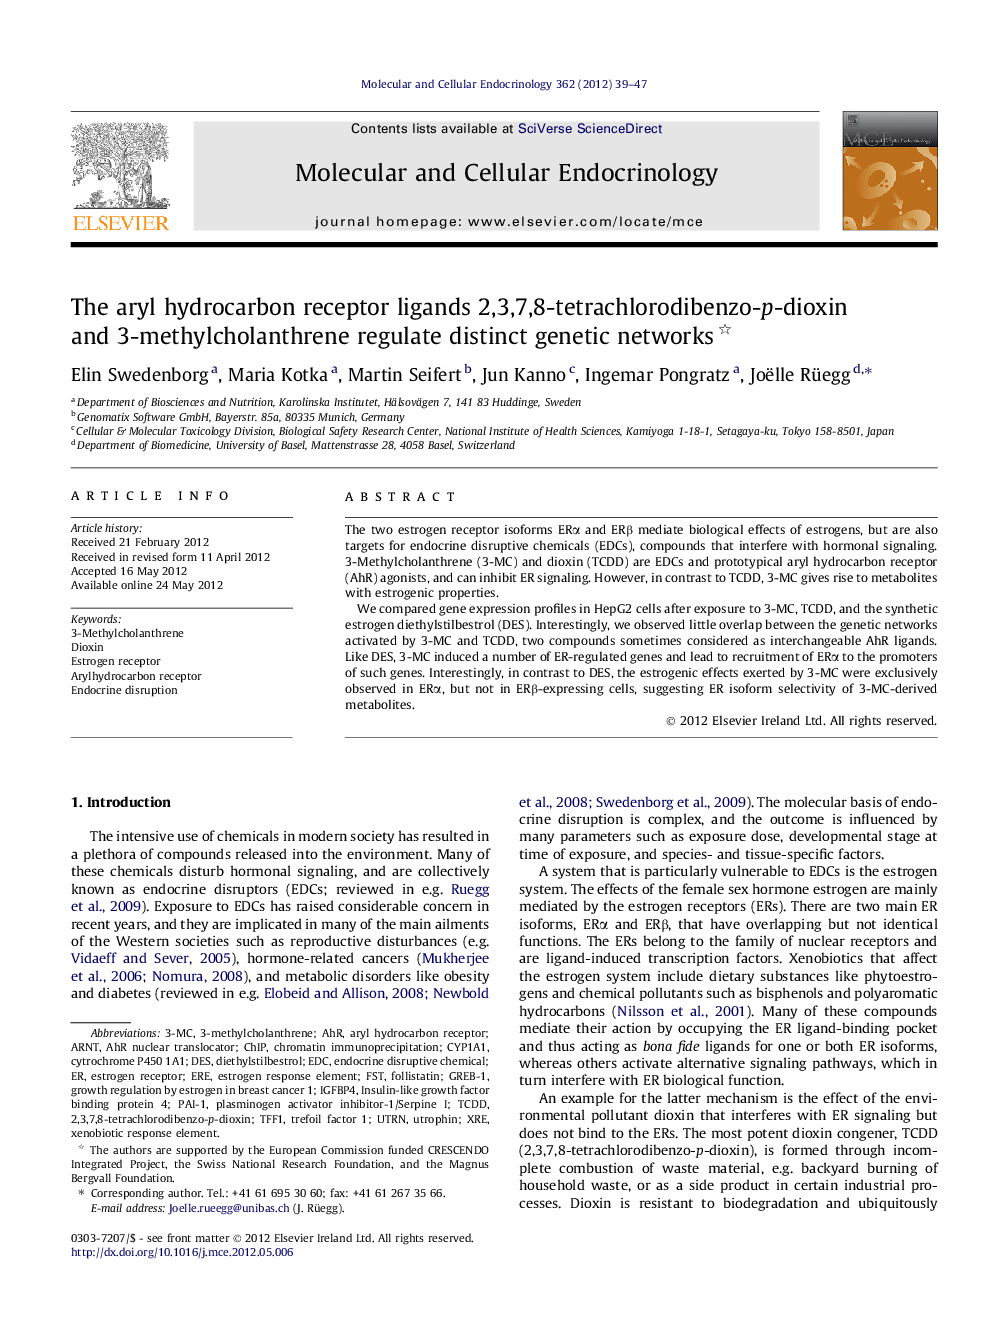 The aryl hydrocarbon receptor ligands 2,3,7,8-tetrachlorodibenzo-p-dioxin and 3-methylcholanthrene regulate distinct genetic networks 